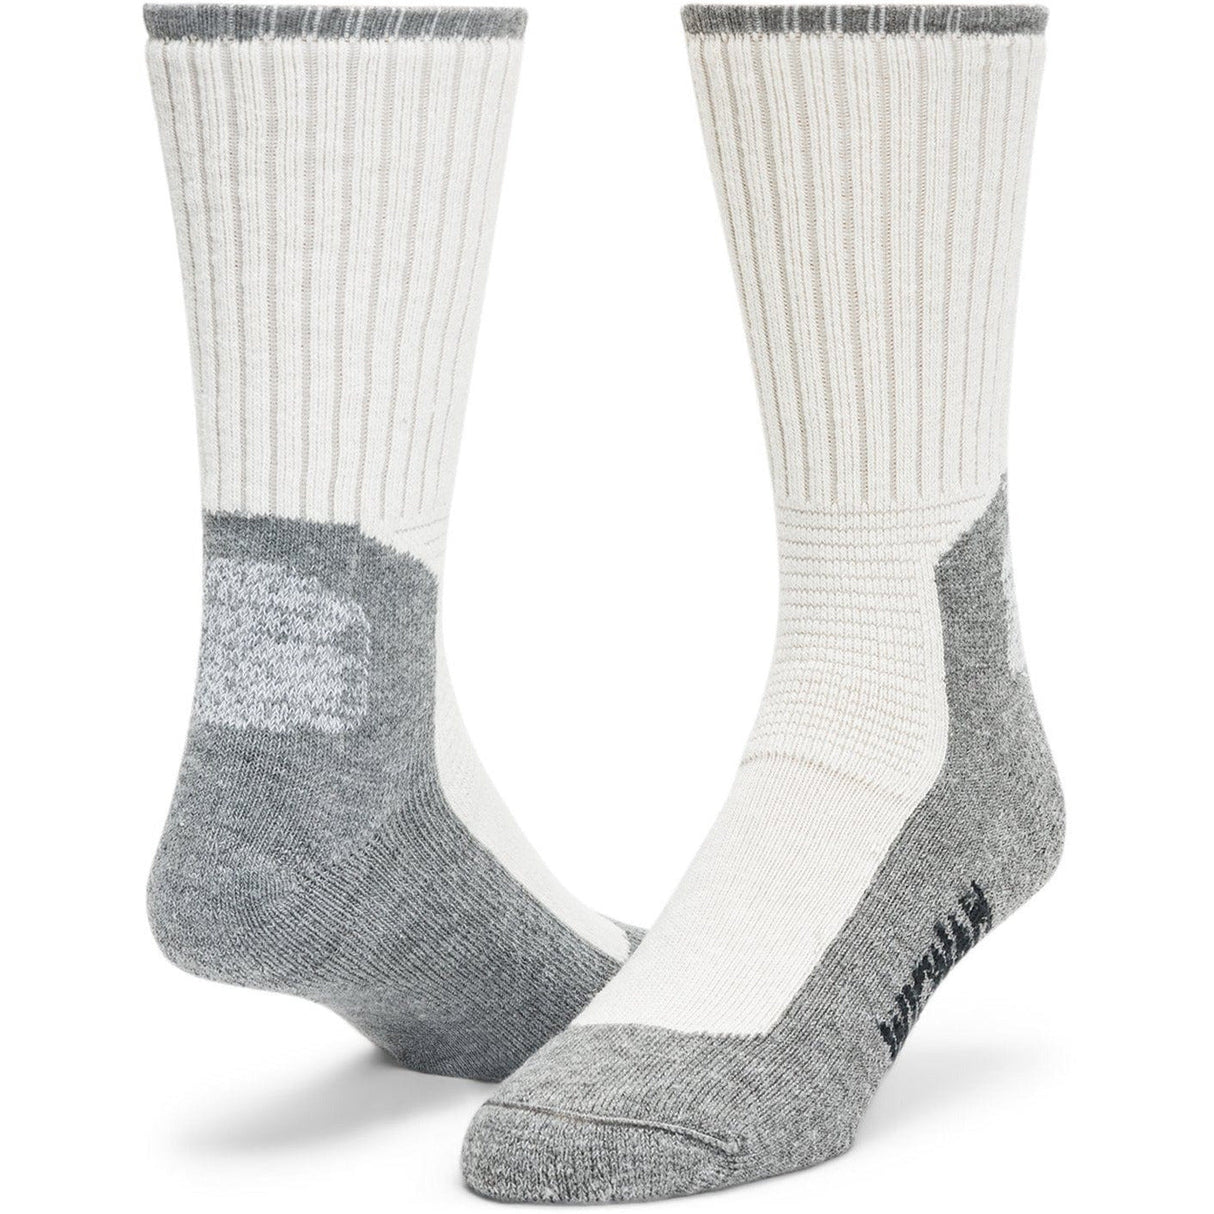 Wigwam At Work DuraSole Pro 2-Pack Socks  -  Medium / White/Gray